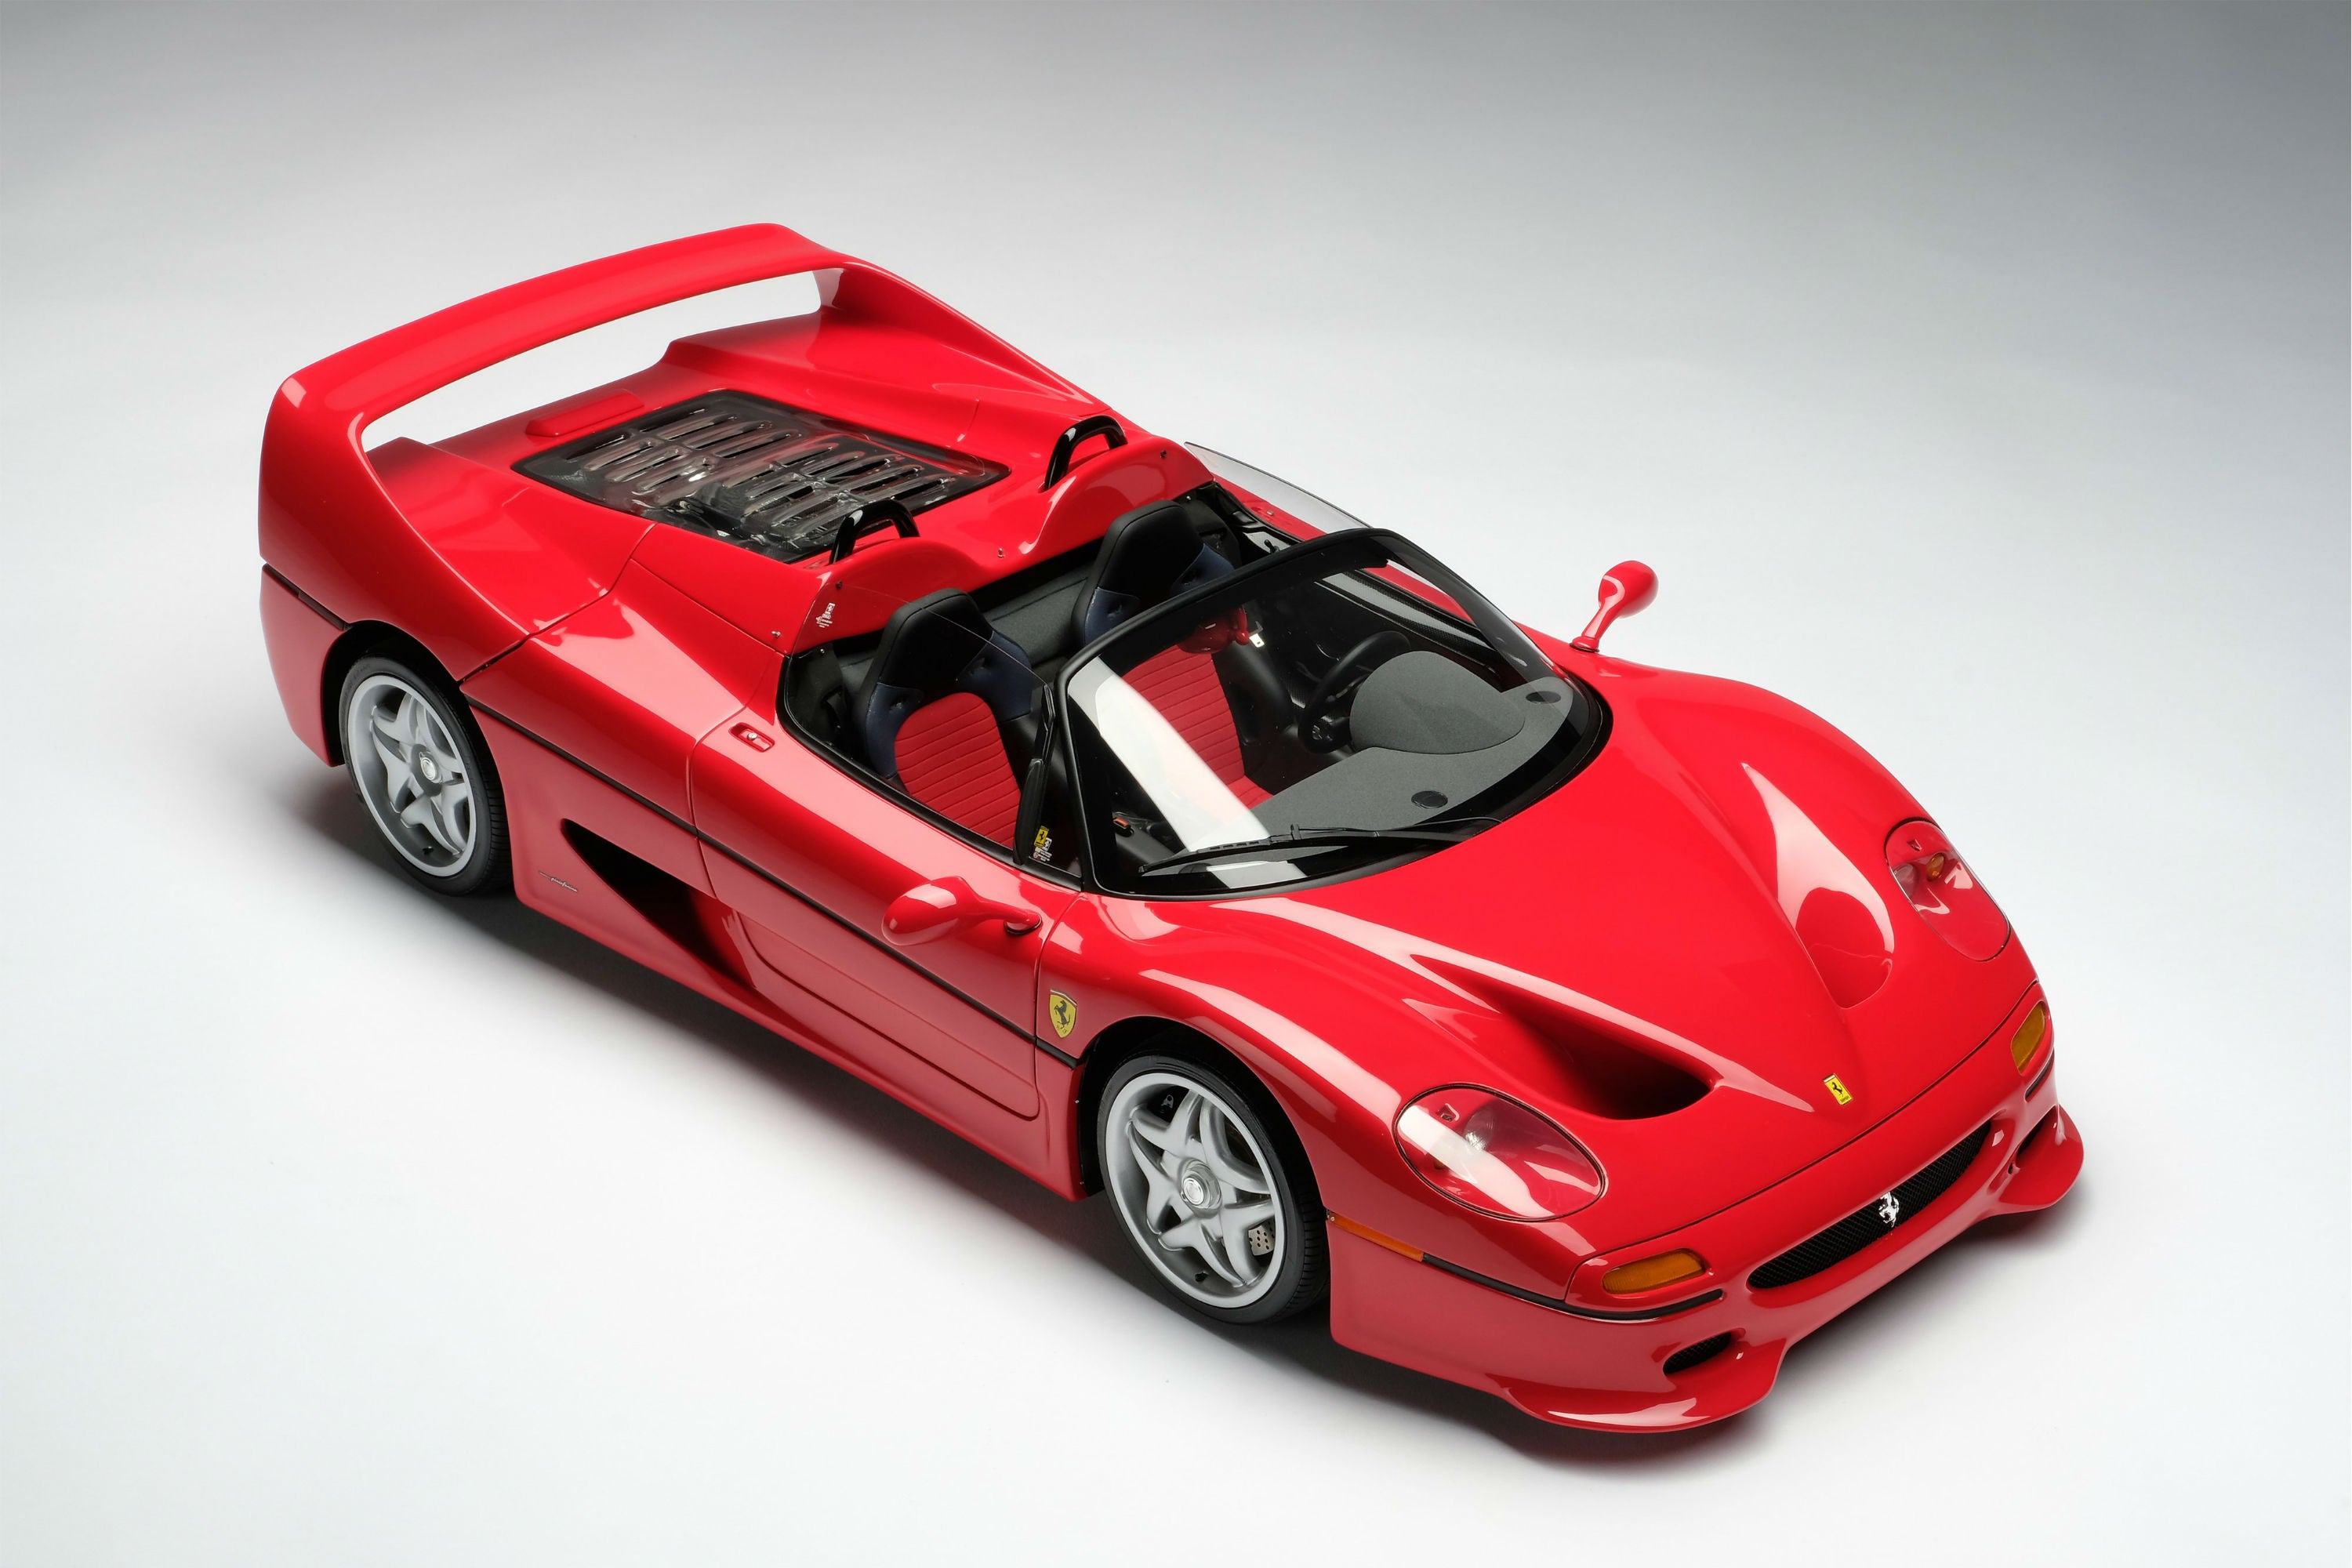 1 Of 1 Ferrari Ferrari S Newest Million Dollar Supercar Already Sold